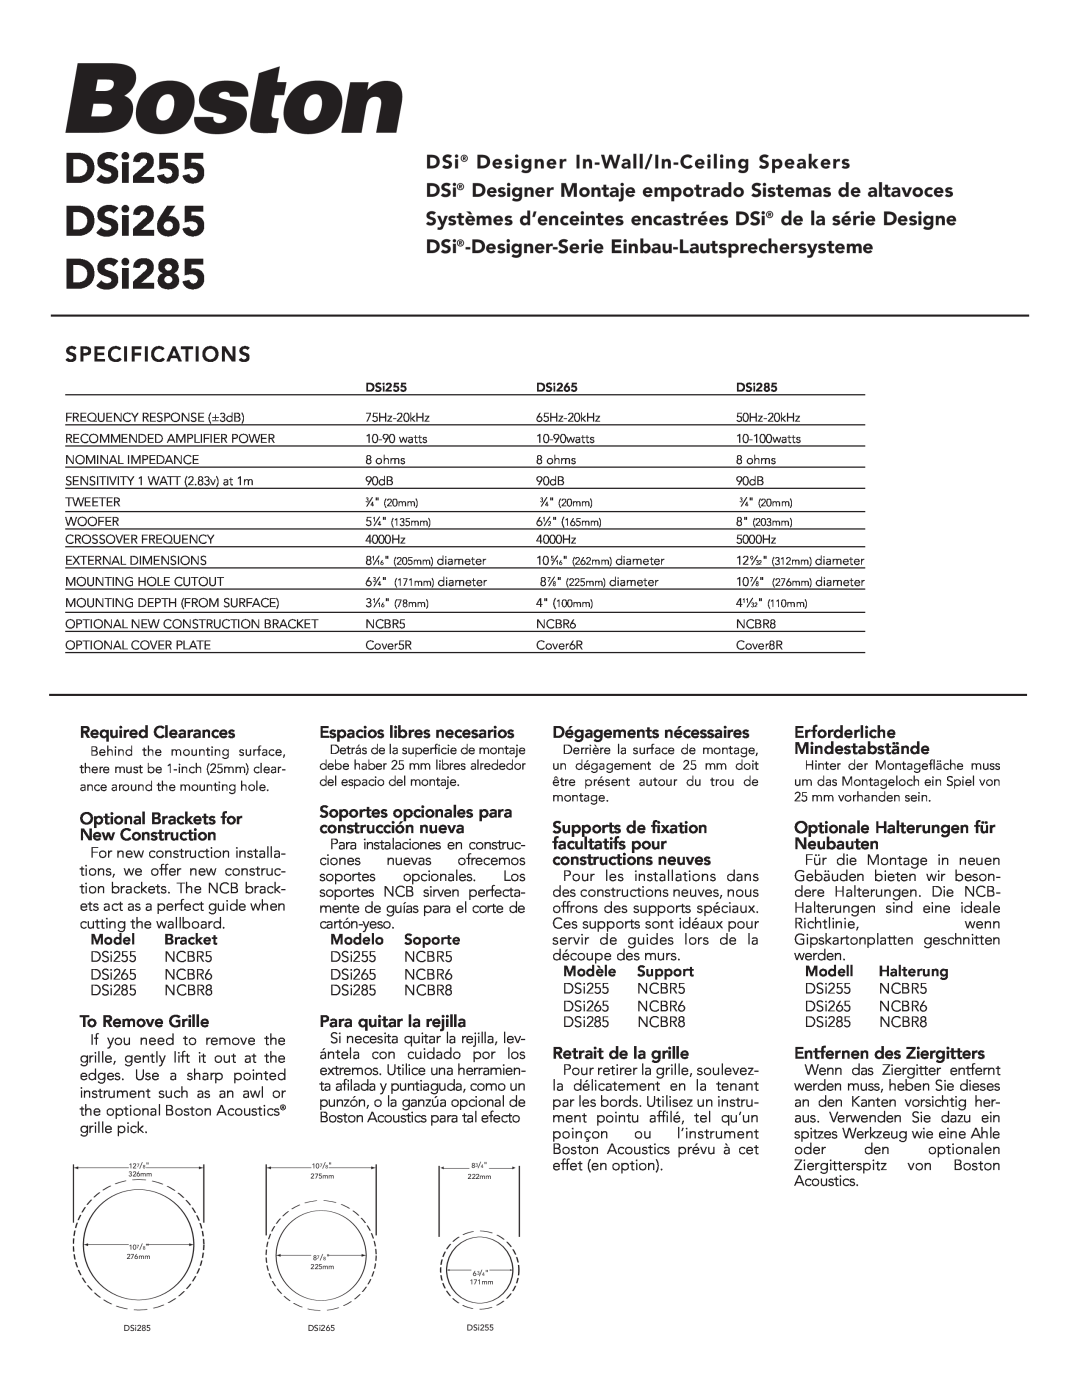 Boston Acoustics manual DSi255 DSi455 DSi455T2 DSi465 DSi485 